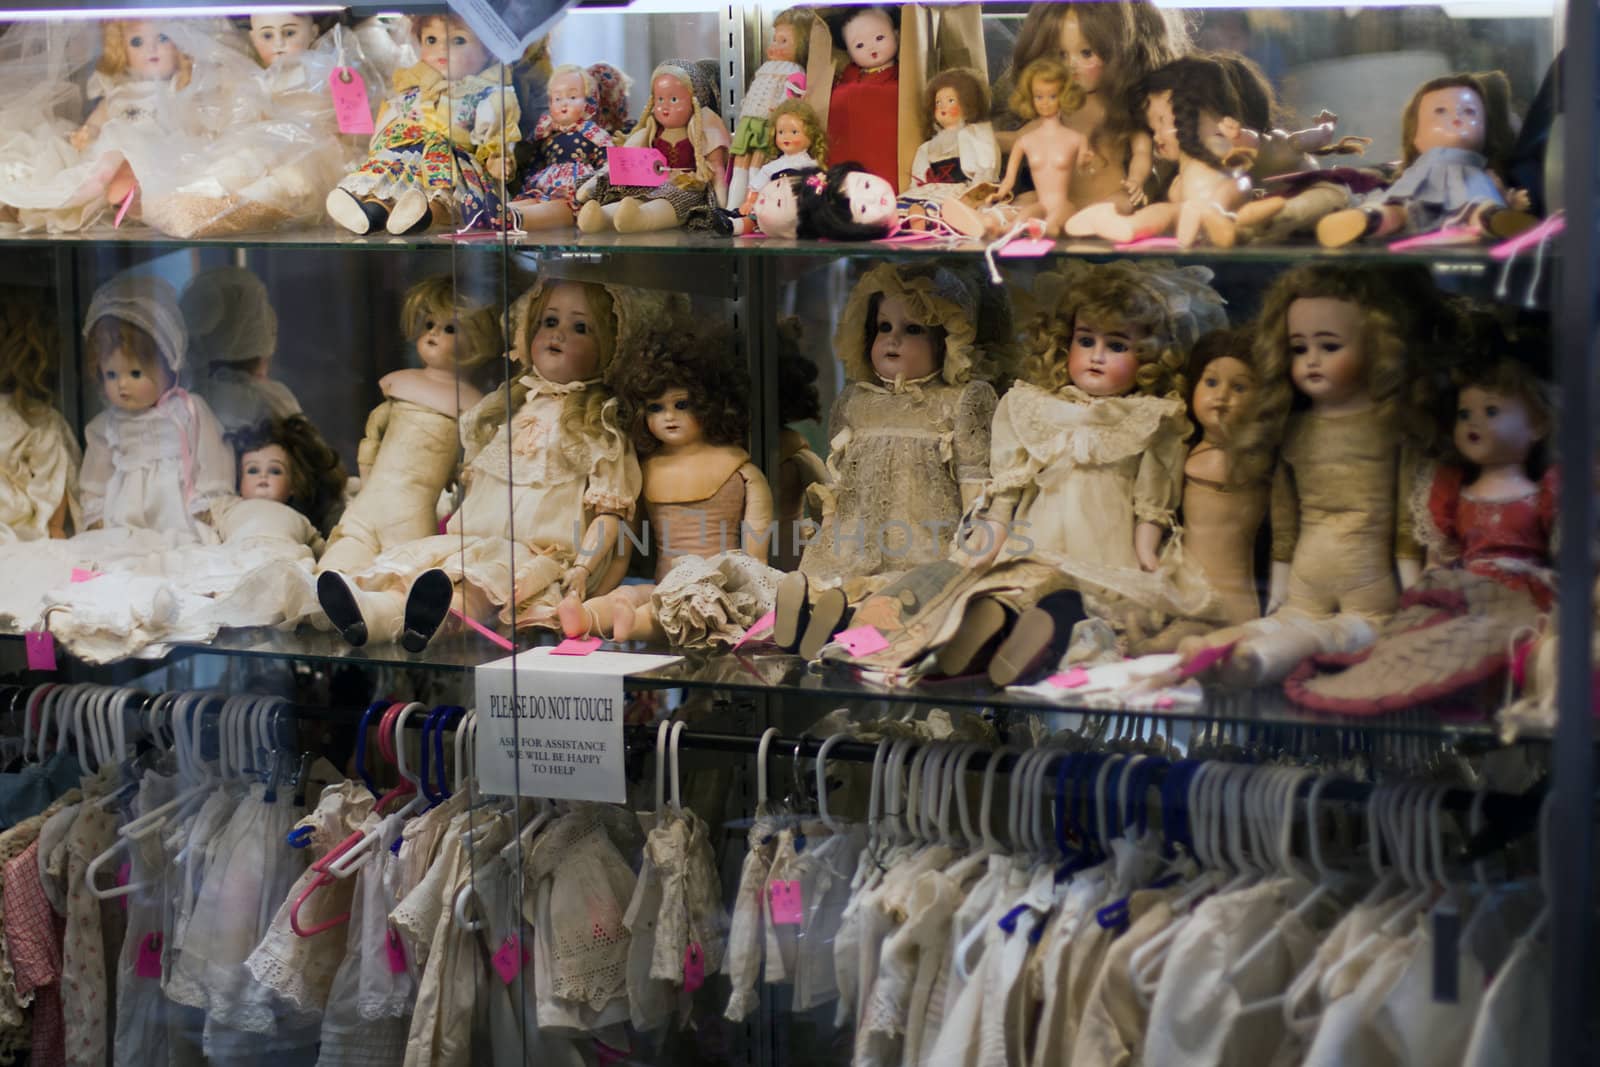 Vintage doll showcase in antique store by GunterNezhoda